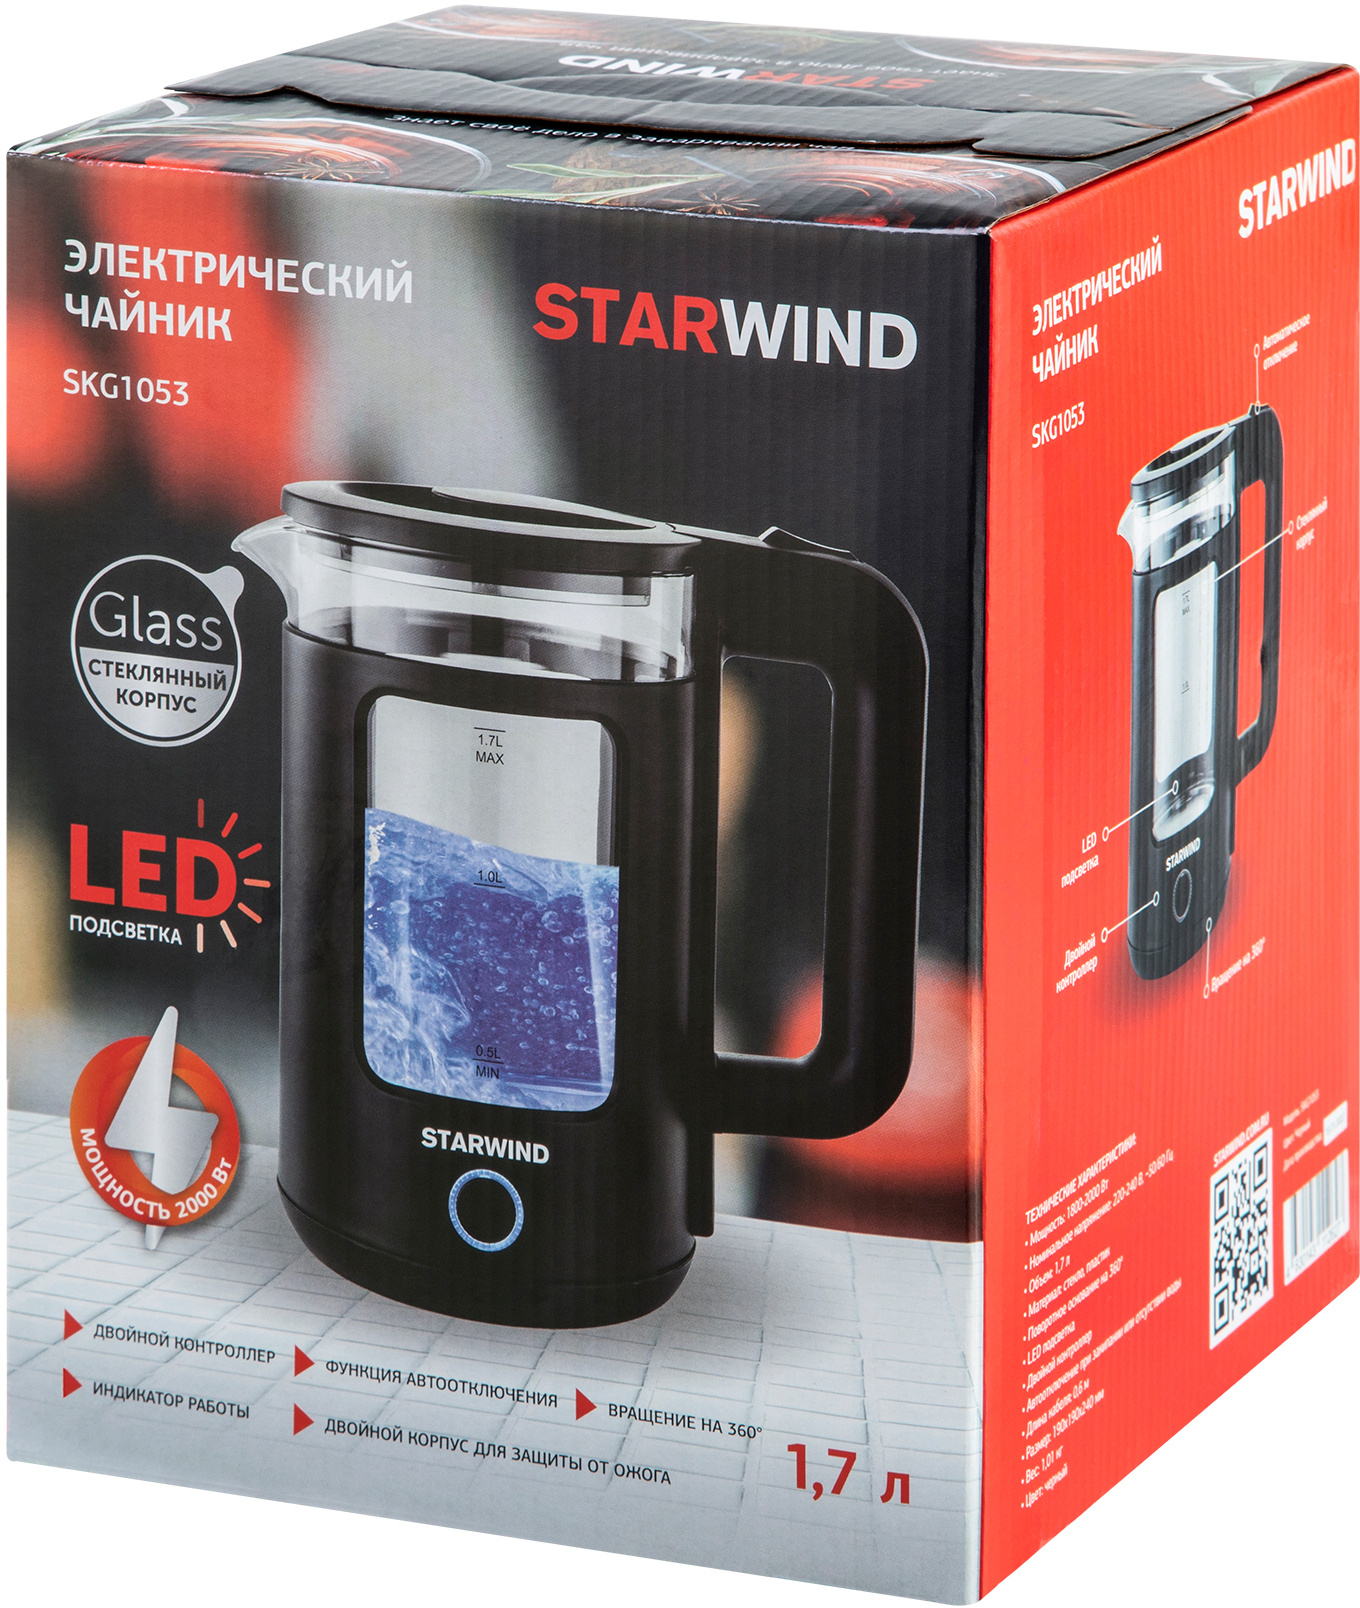 Чайник электрический Starwind SKG1053 черный, стекло от магазина Старвинд